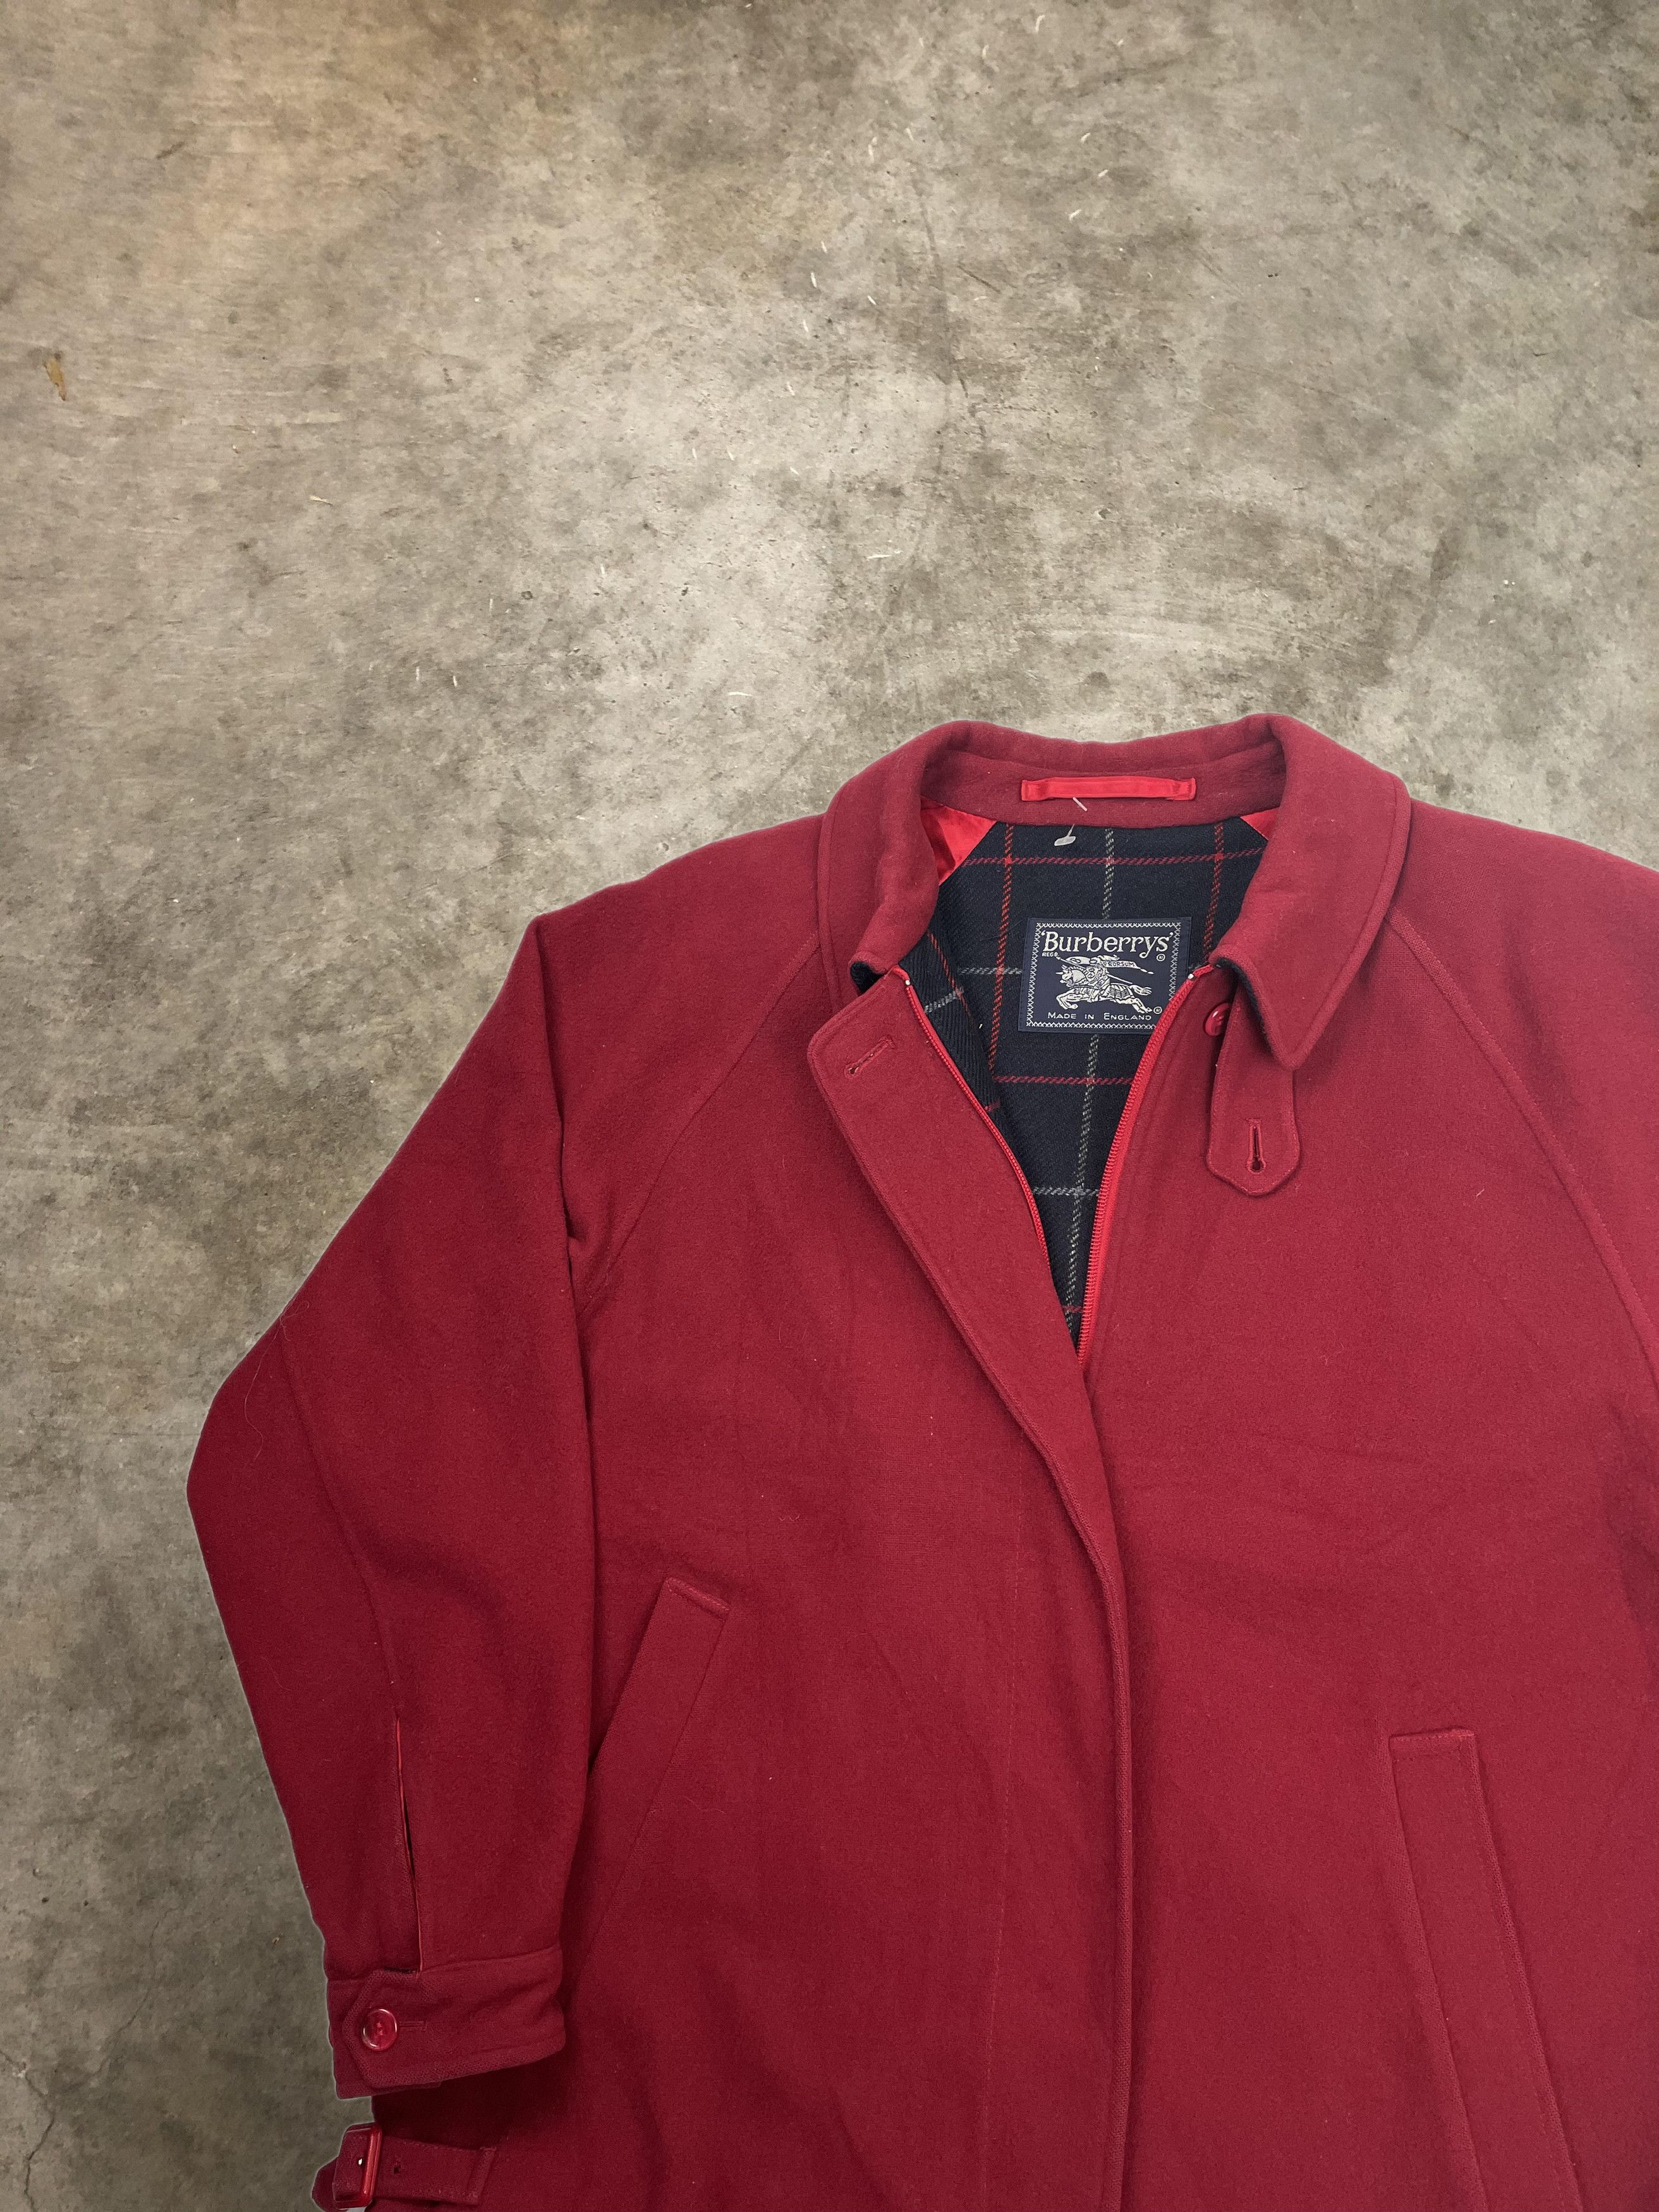 Vintage Vintage Burberry Wool Jacket Red Zip Up Coat Nova Check